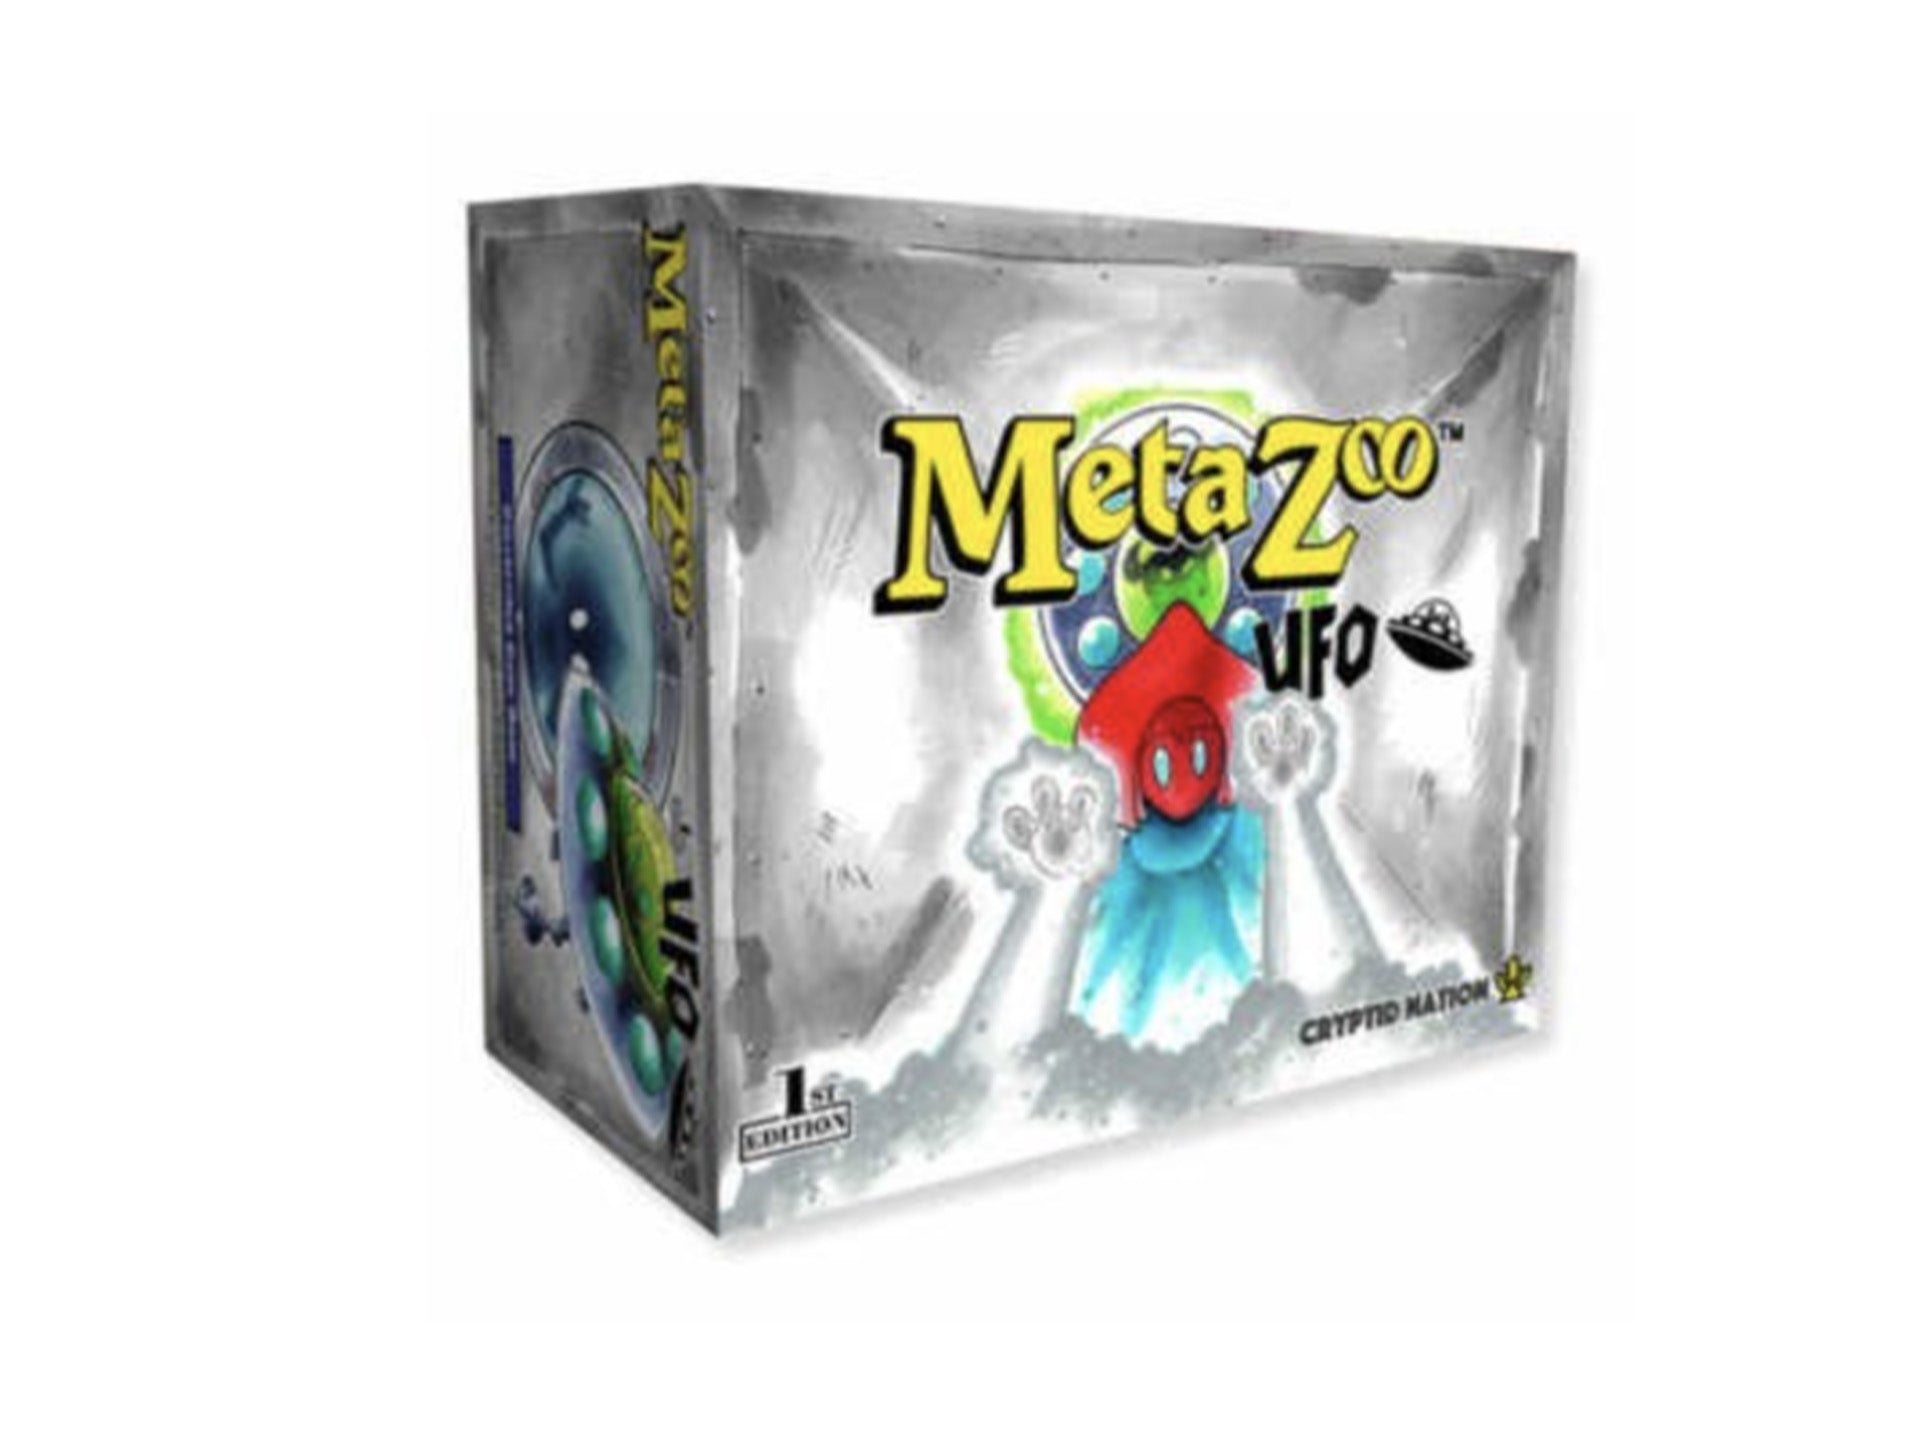 Metazoo Cryptid Nation 1st Edition UFO